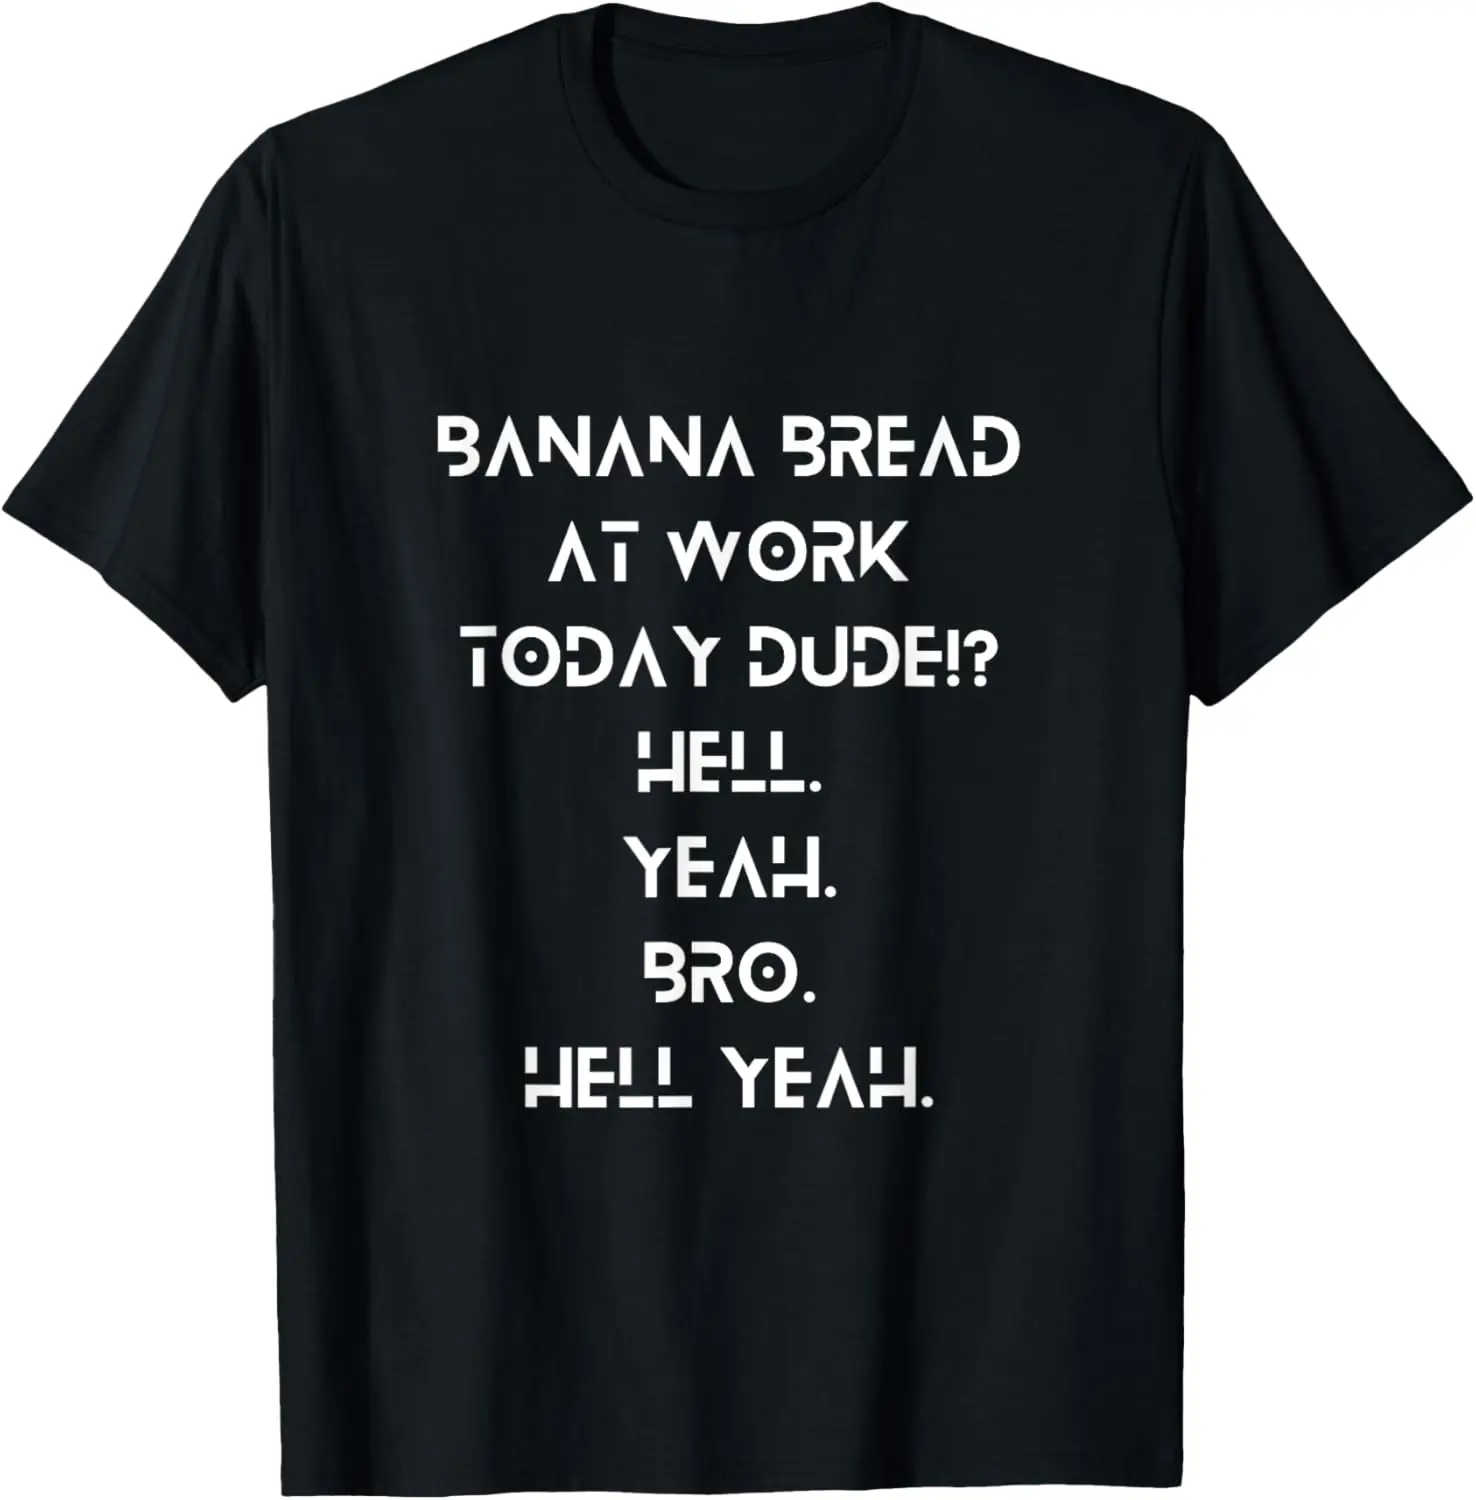 

Banana Bread Break at Work Dude! Hell Yeah, Bro – Funny T-Shirt